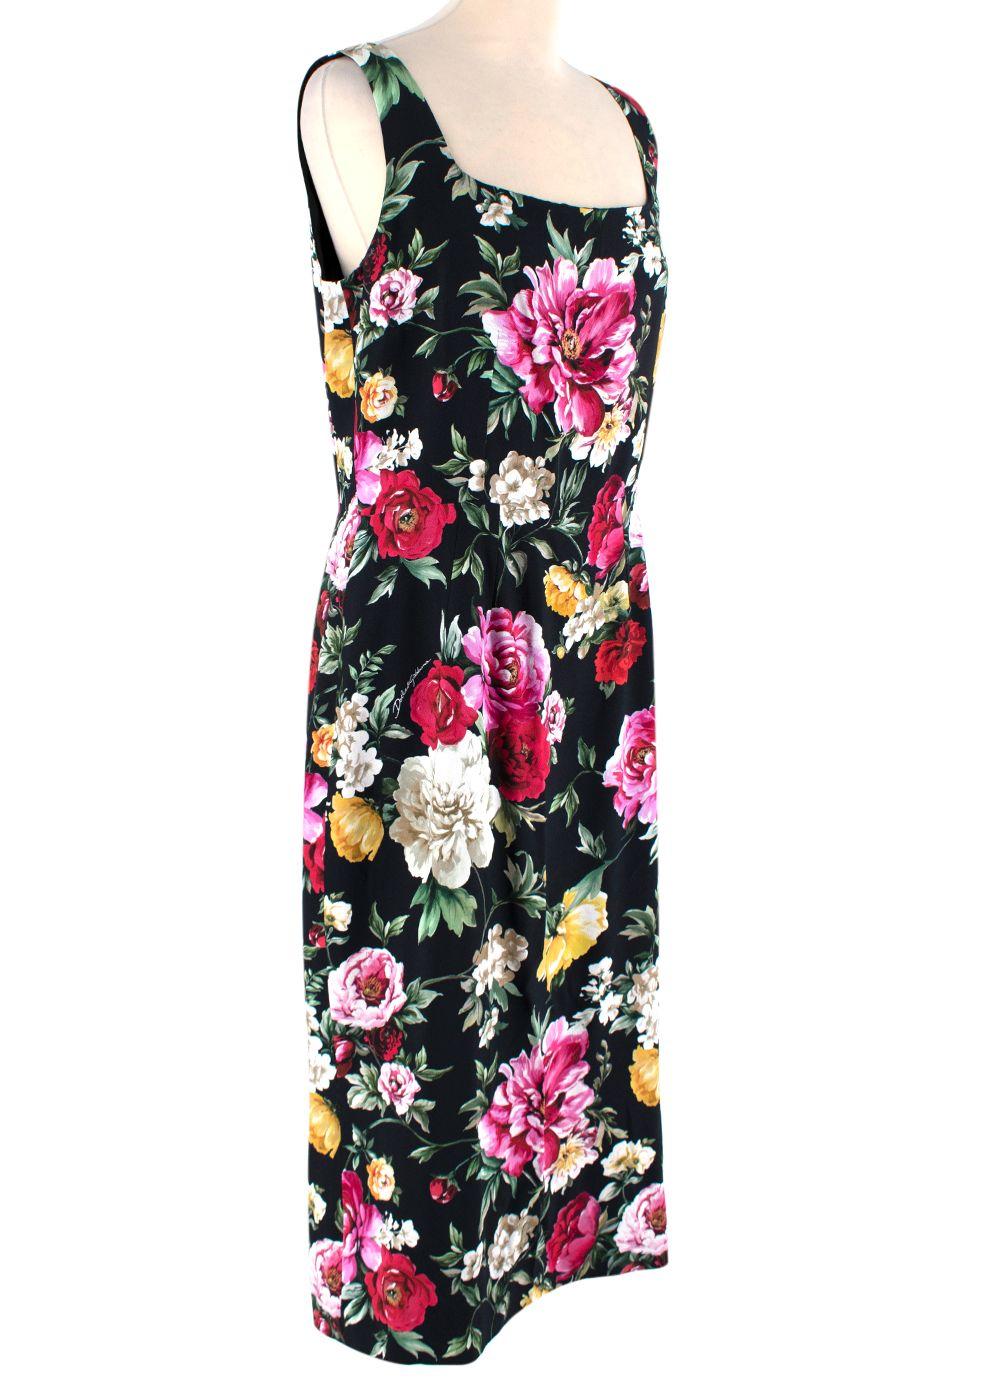 Dolce & Gabbana Black Sleeveless Floral Print Midi Dress

- Fluid, lightweight silk dress
- Bright floral printed design surrounding dress
- Scoop neckline
- Slim fitting 
- Back zip fastening with flap cover 
- Black silk lining

Materials:
94%